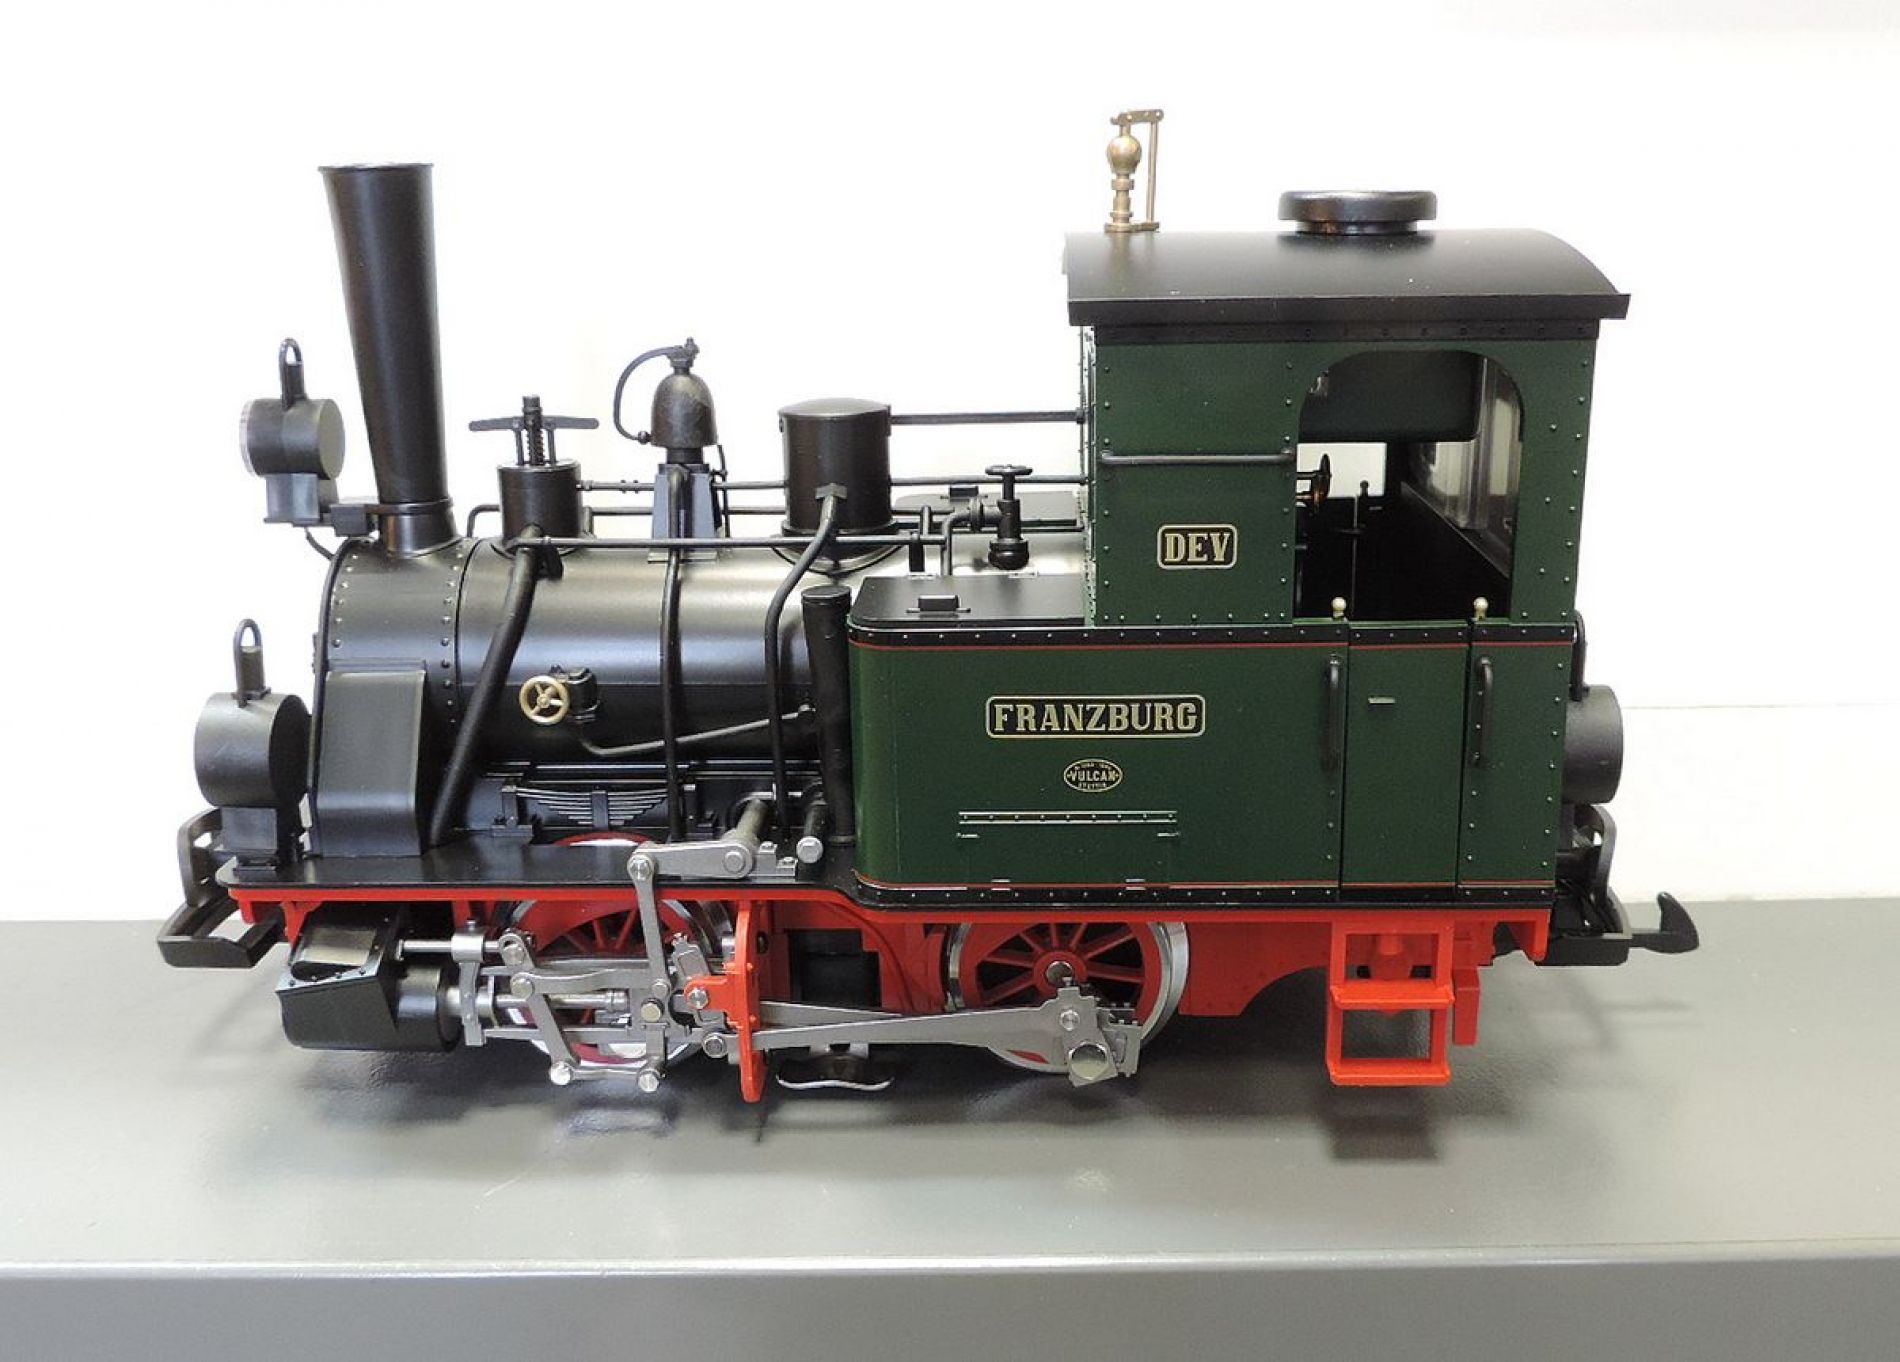 Le20181_LGB-20181-Tenderlokomotive-Franzburg-DEV.jpg (1920×1376)